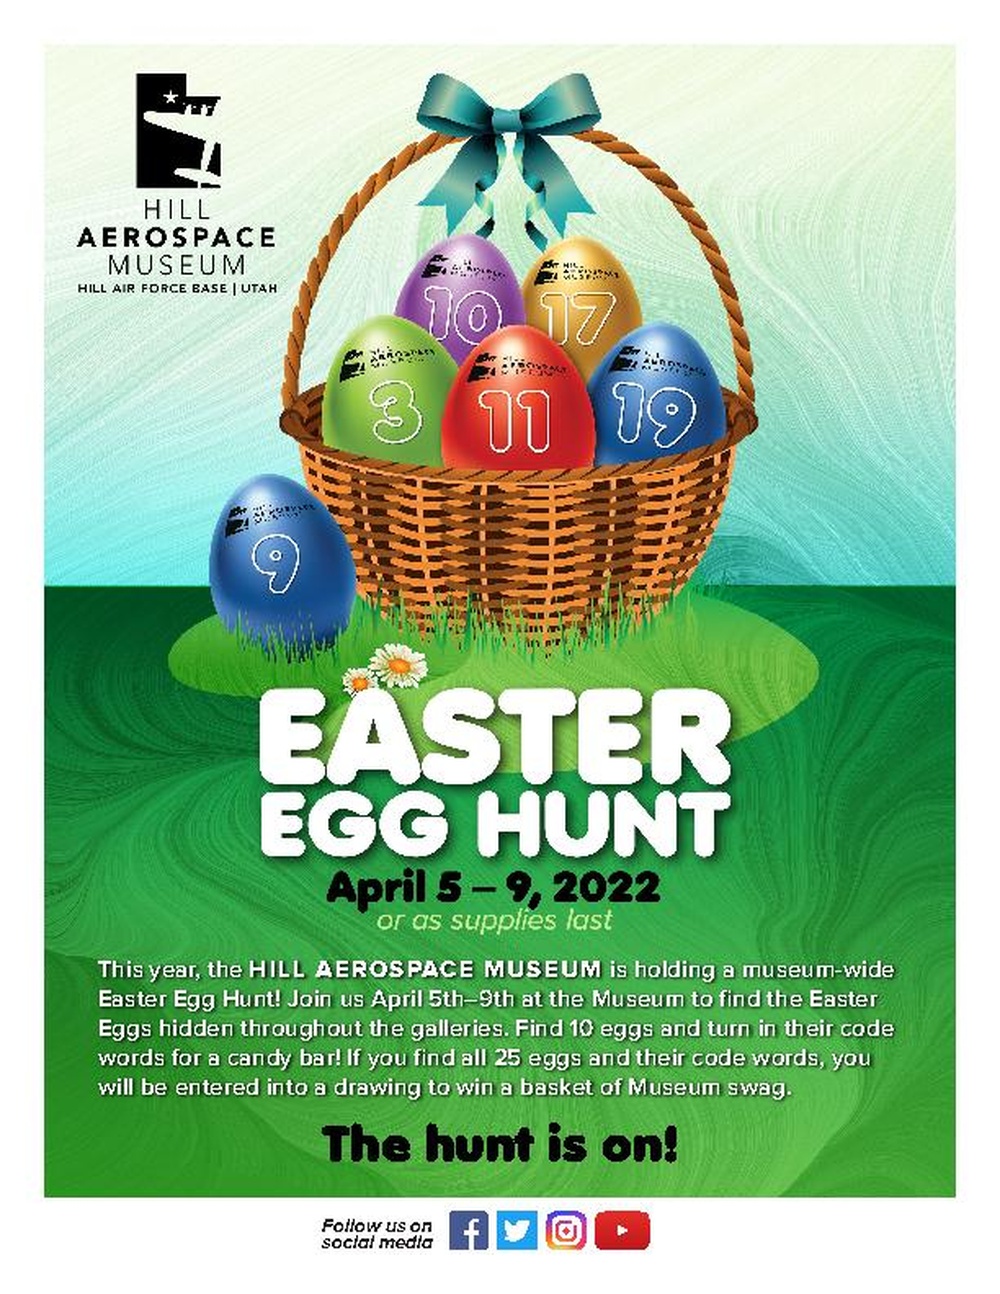 Hill Aerospace Museum Easter Egg Hunt flyer 2022